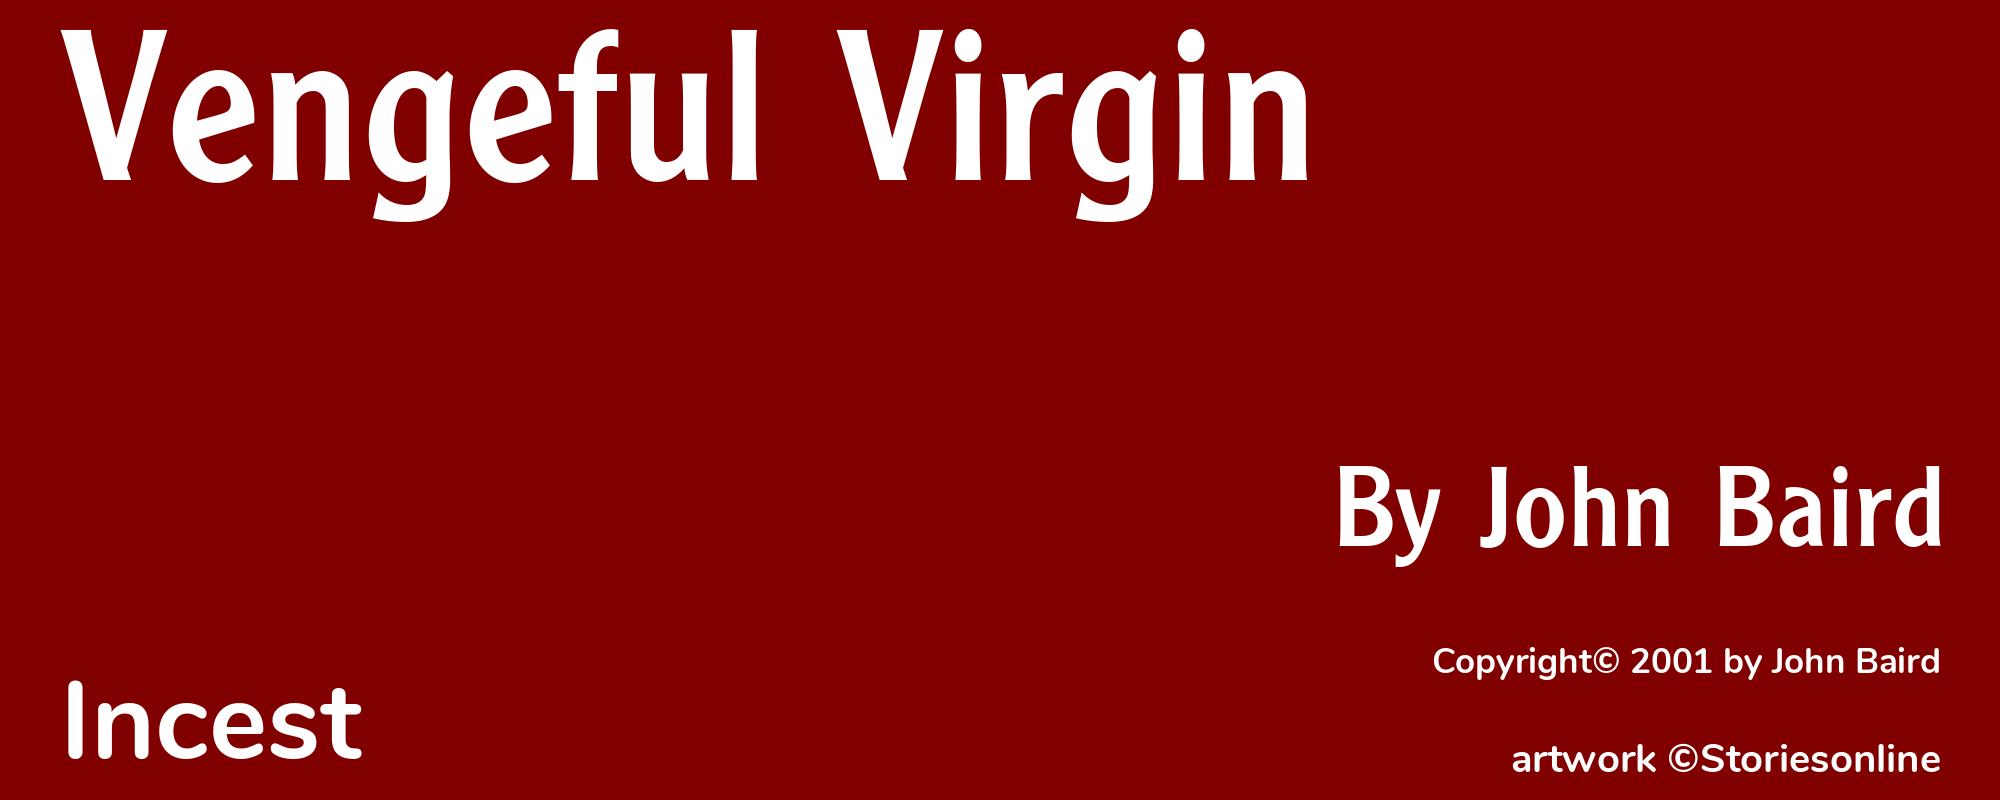 Vengeful Virgin - Cover